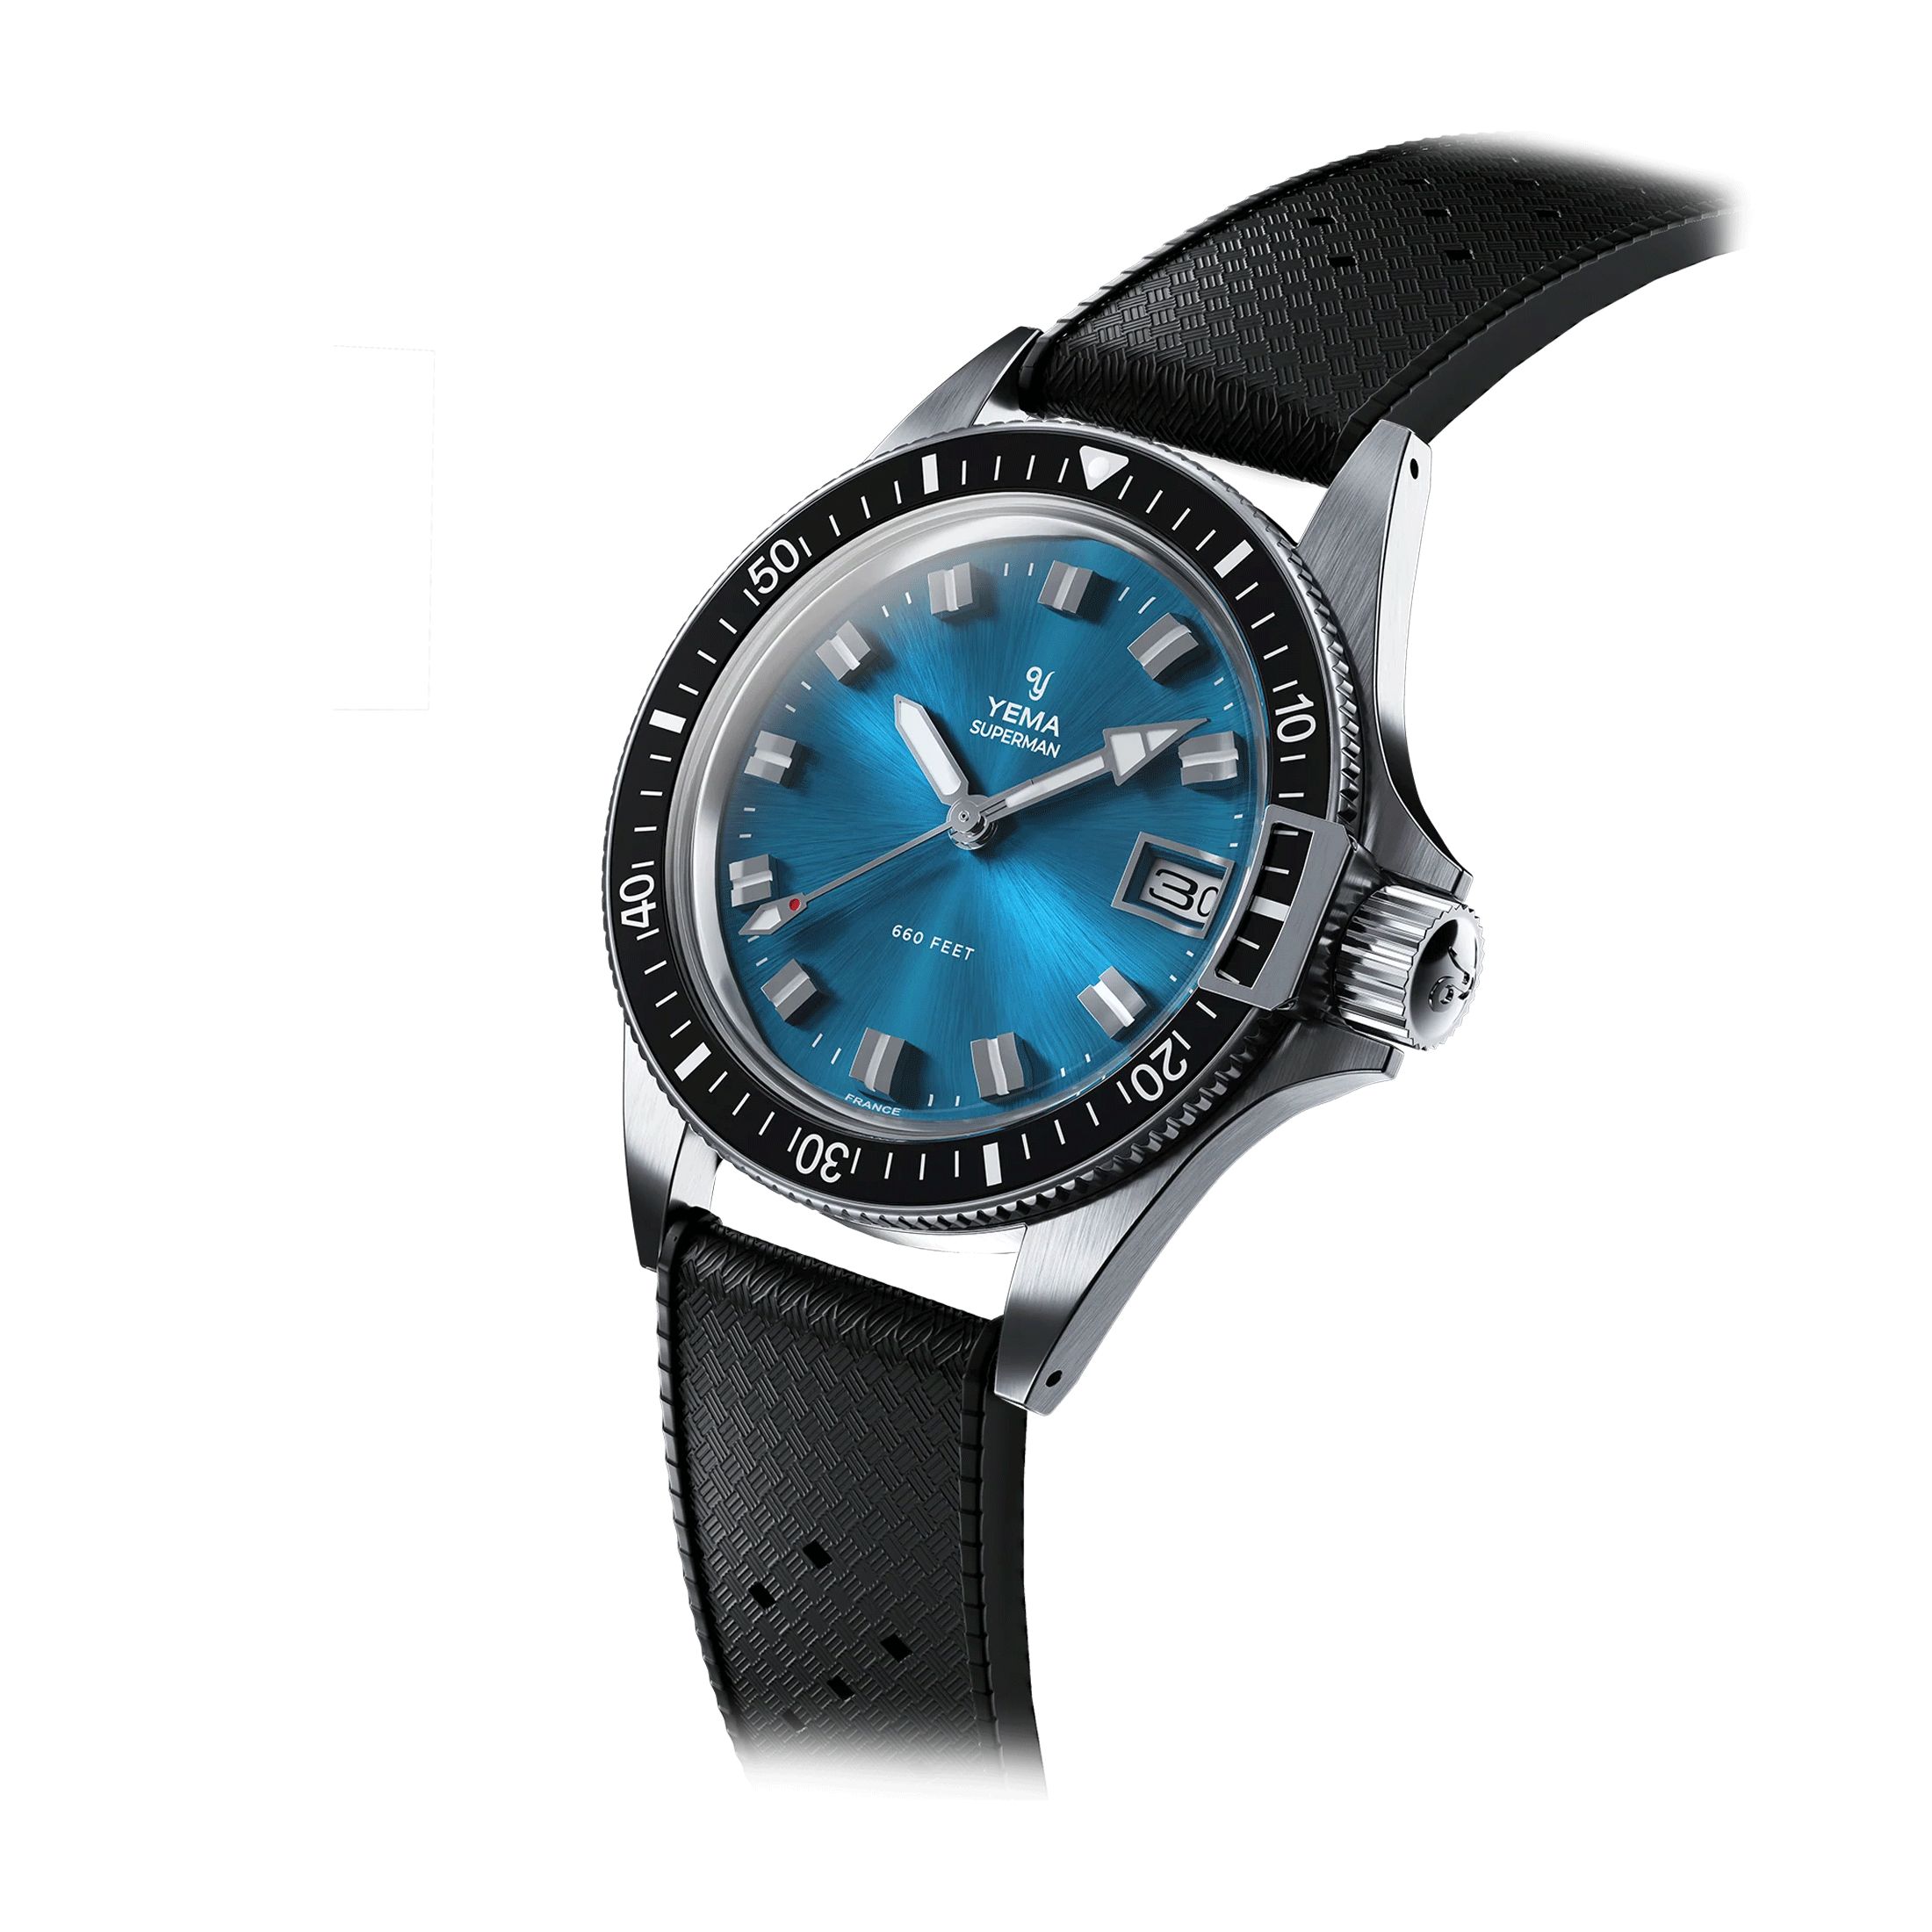 Yema Superman Heritage quartz watch blue dial black rubber strap 39 mm